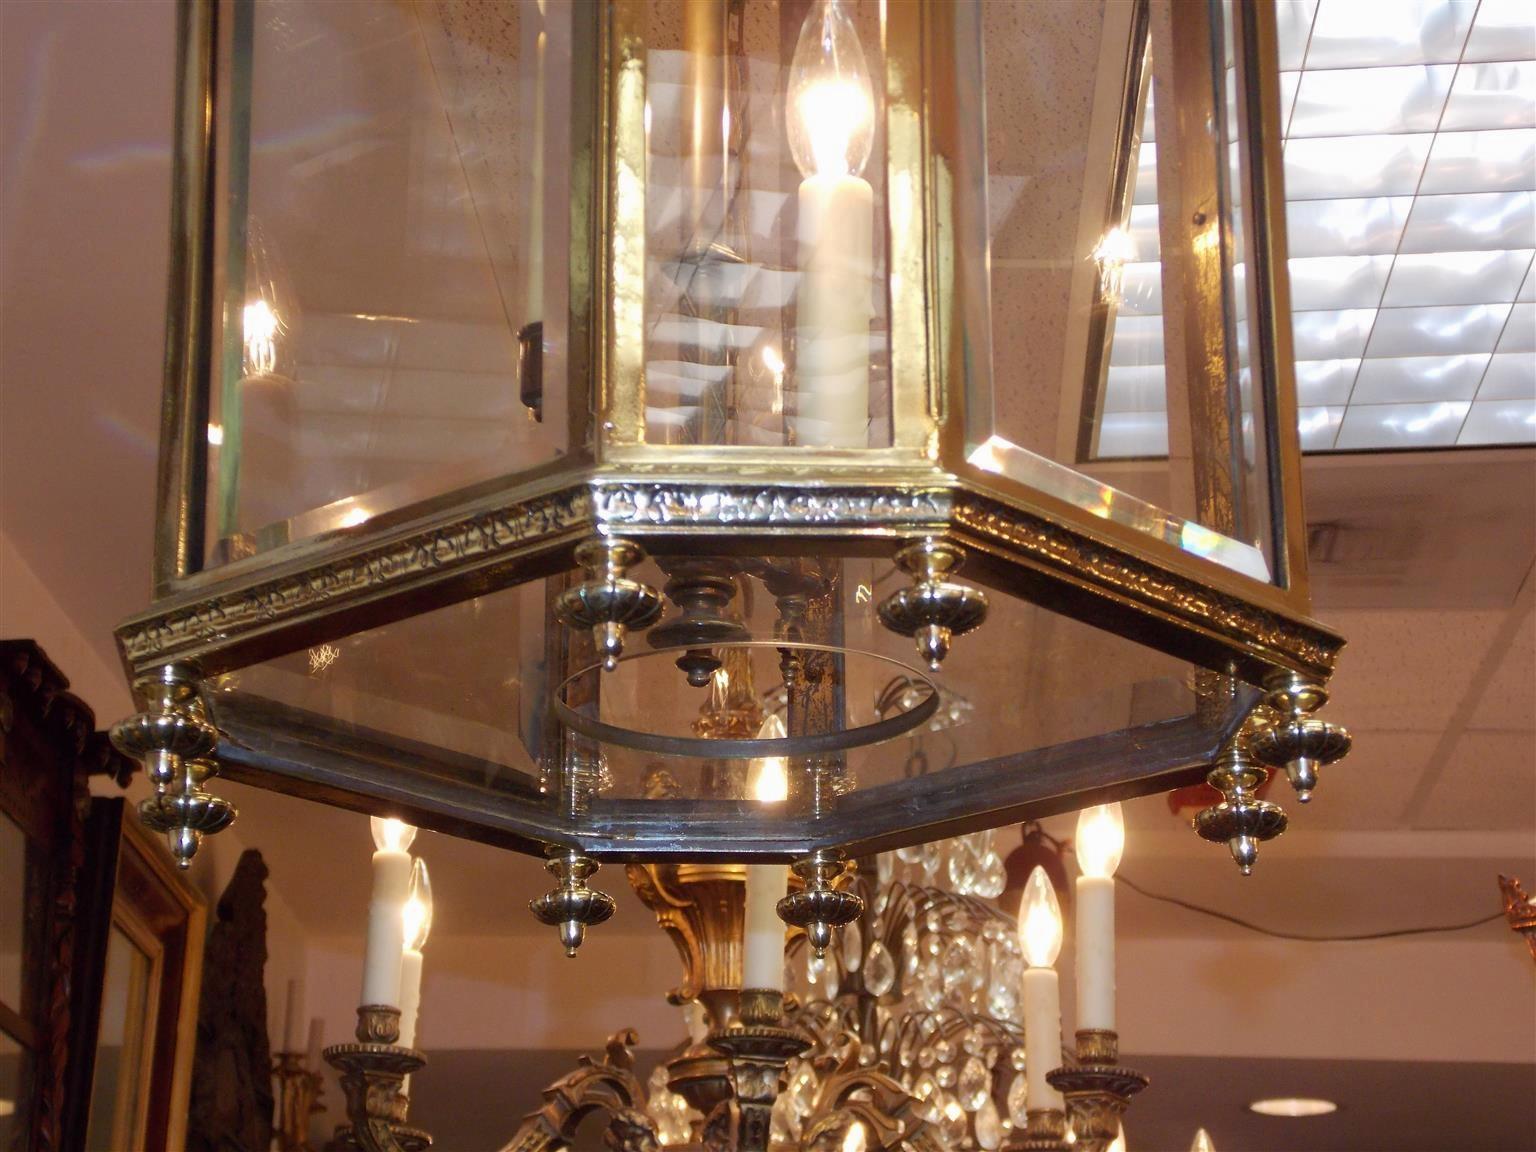 English Brass Octagon Decorative Dome and Beveled Glass Hall Lantern, Circa 1820 (Gegossen)